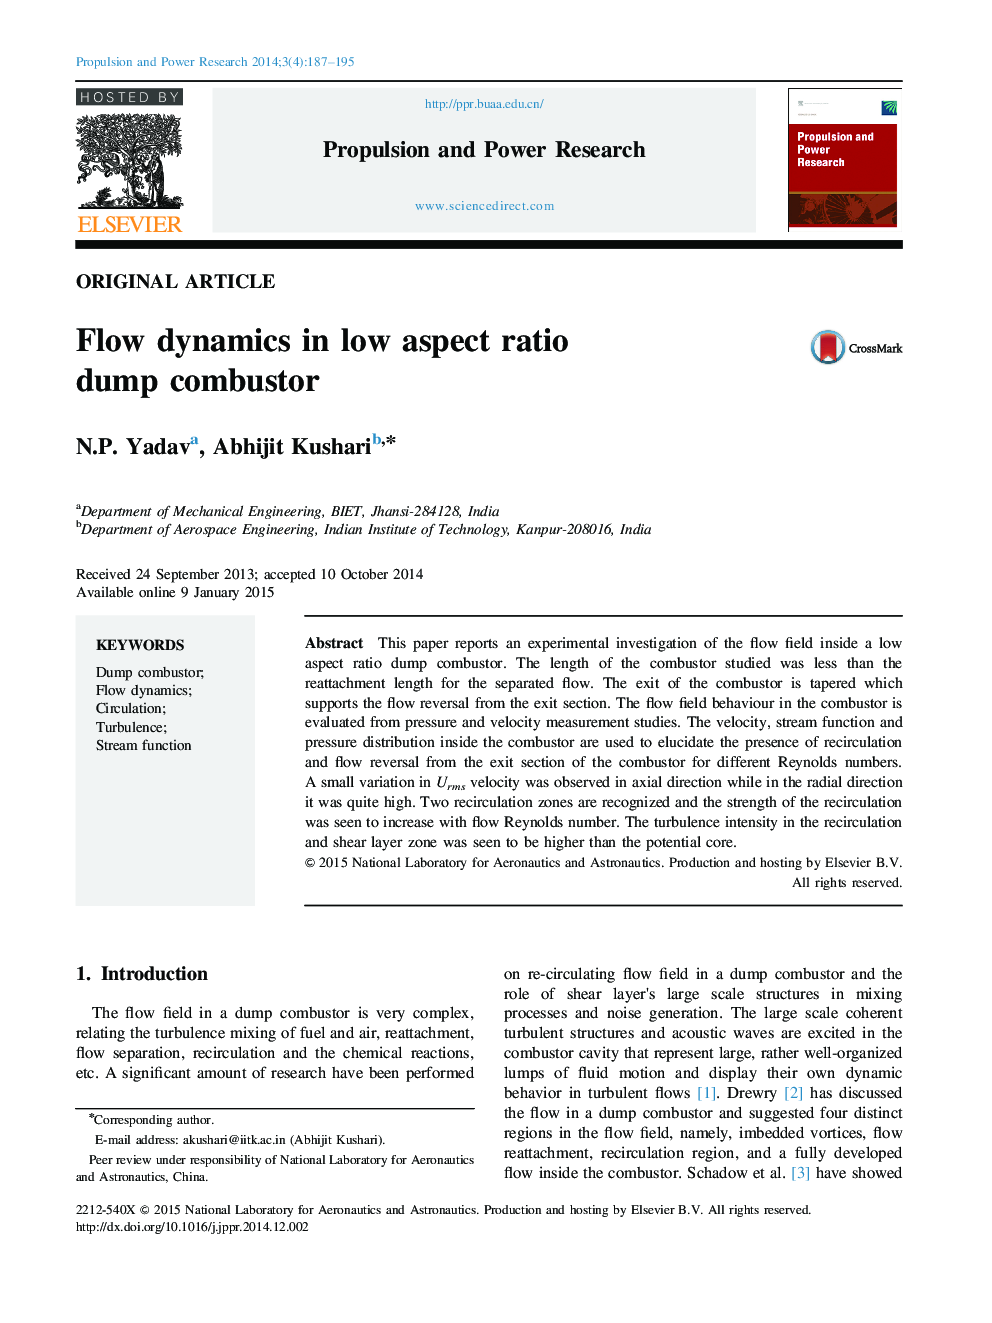 Flow dynamics in low aspect ratio dump combustor 